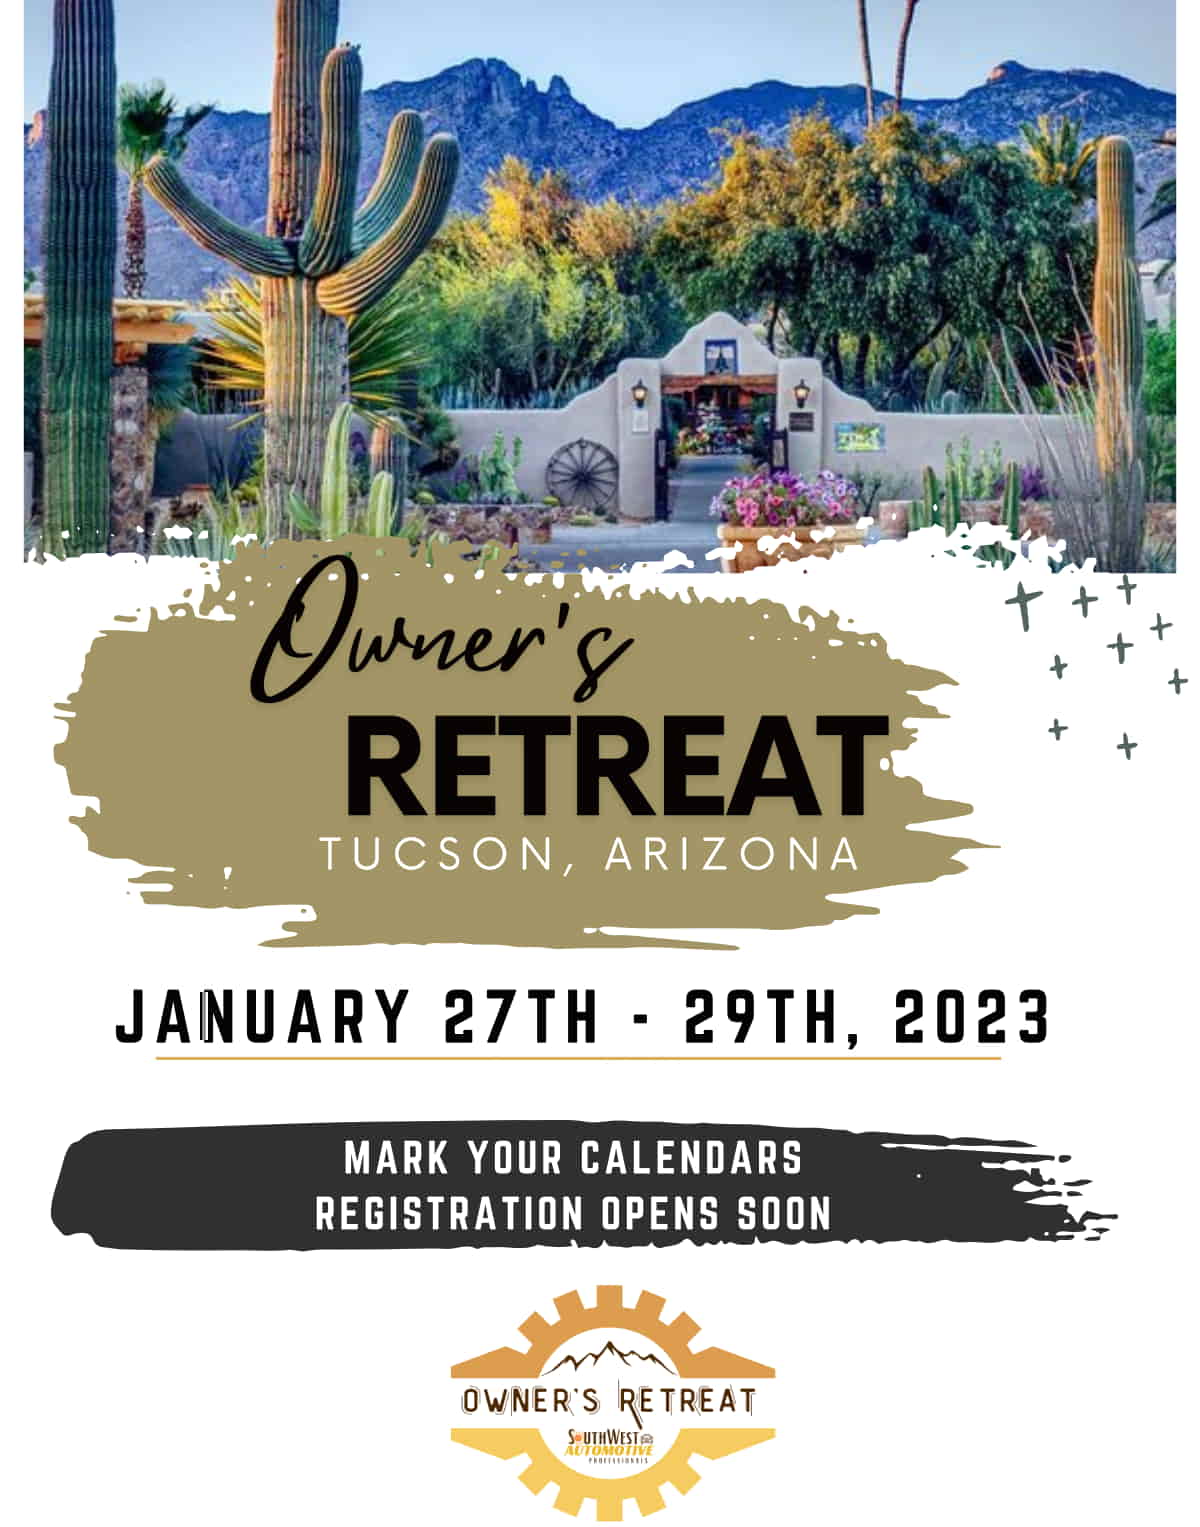 Owner's retreat 2022